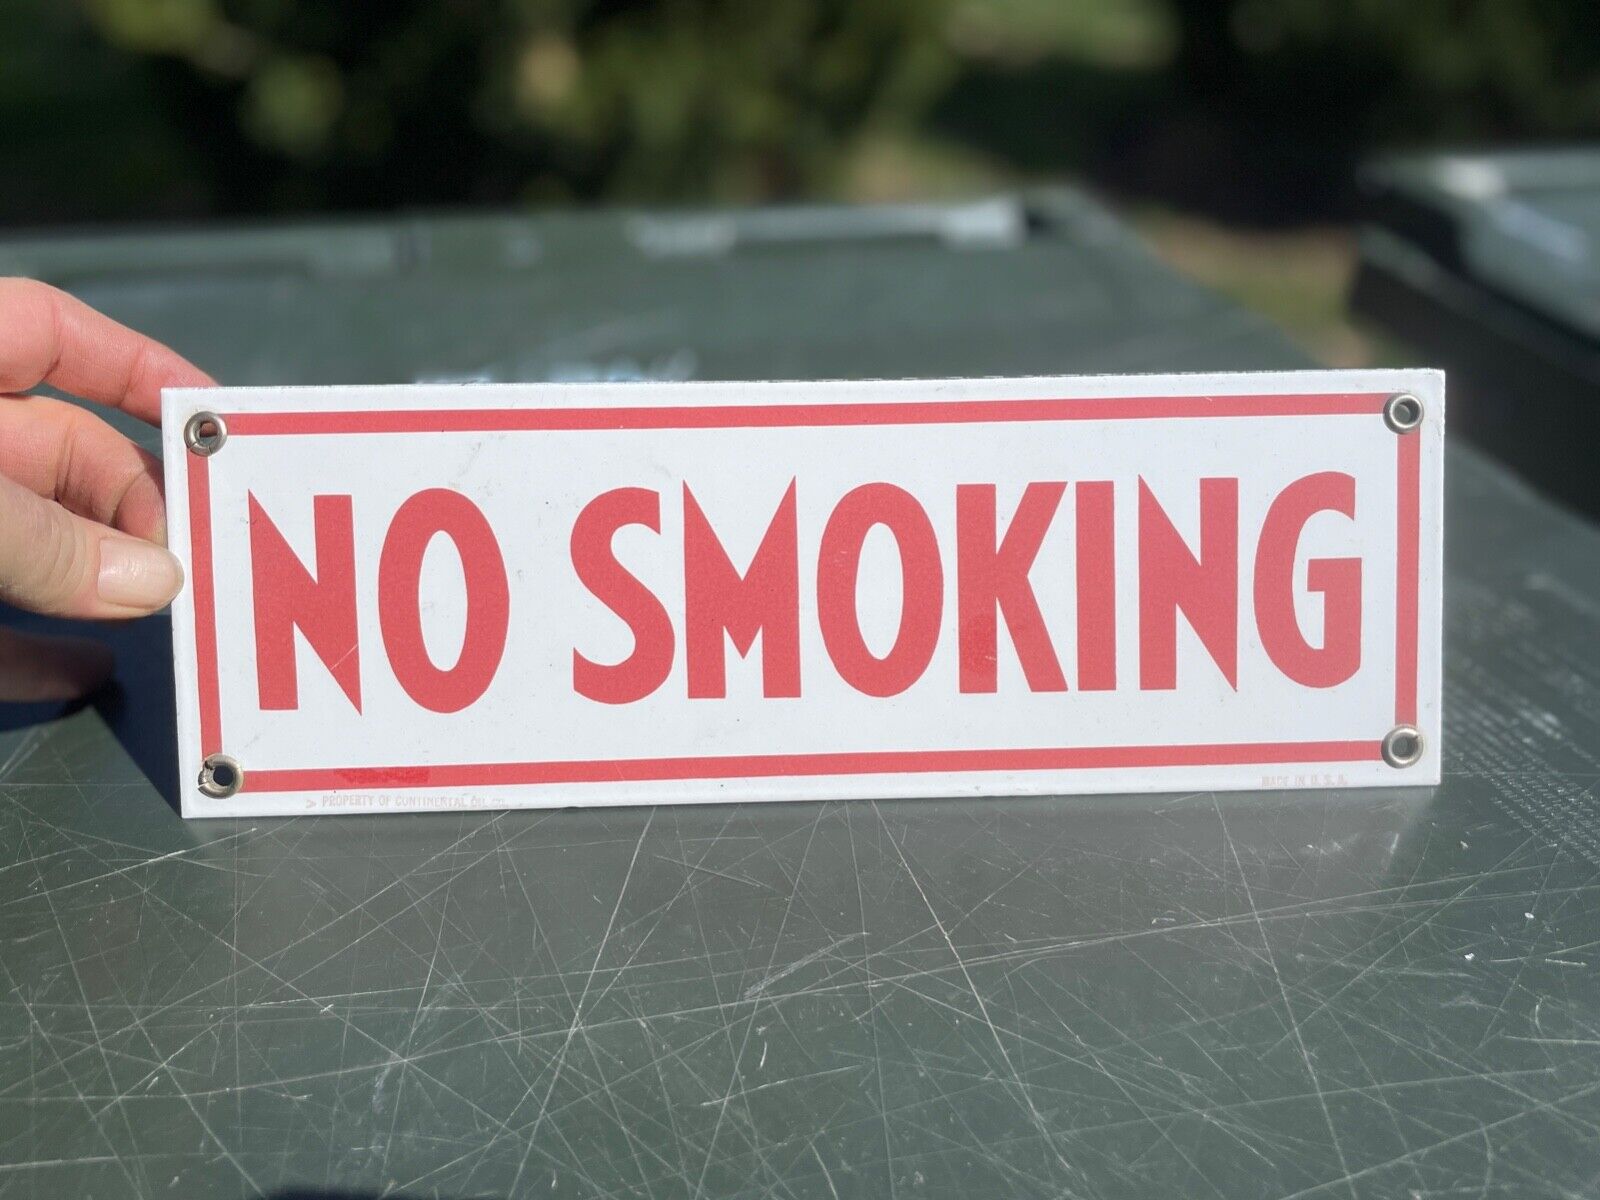 CONOCO NO SMOKING PORCELAIN ADVERTISING SIGN GAS STATION SERVICE AUTOMOBILIA